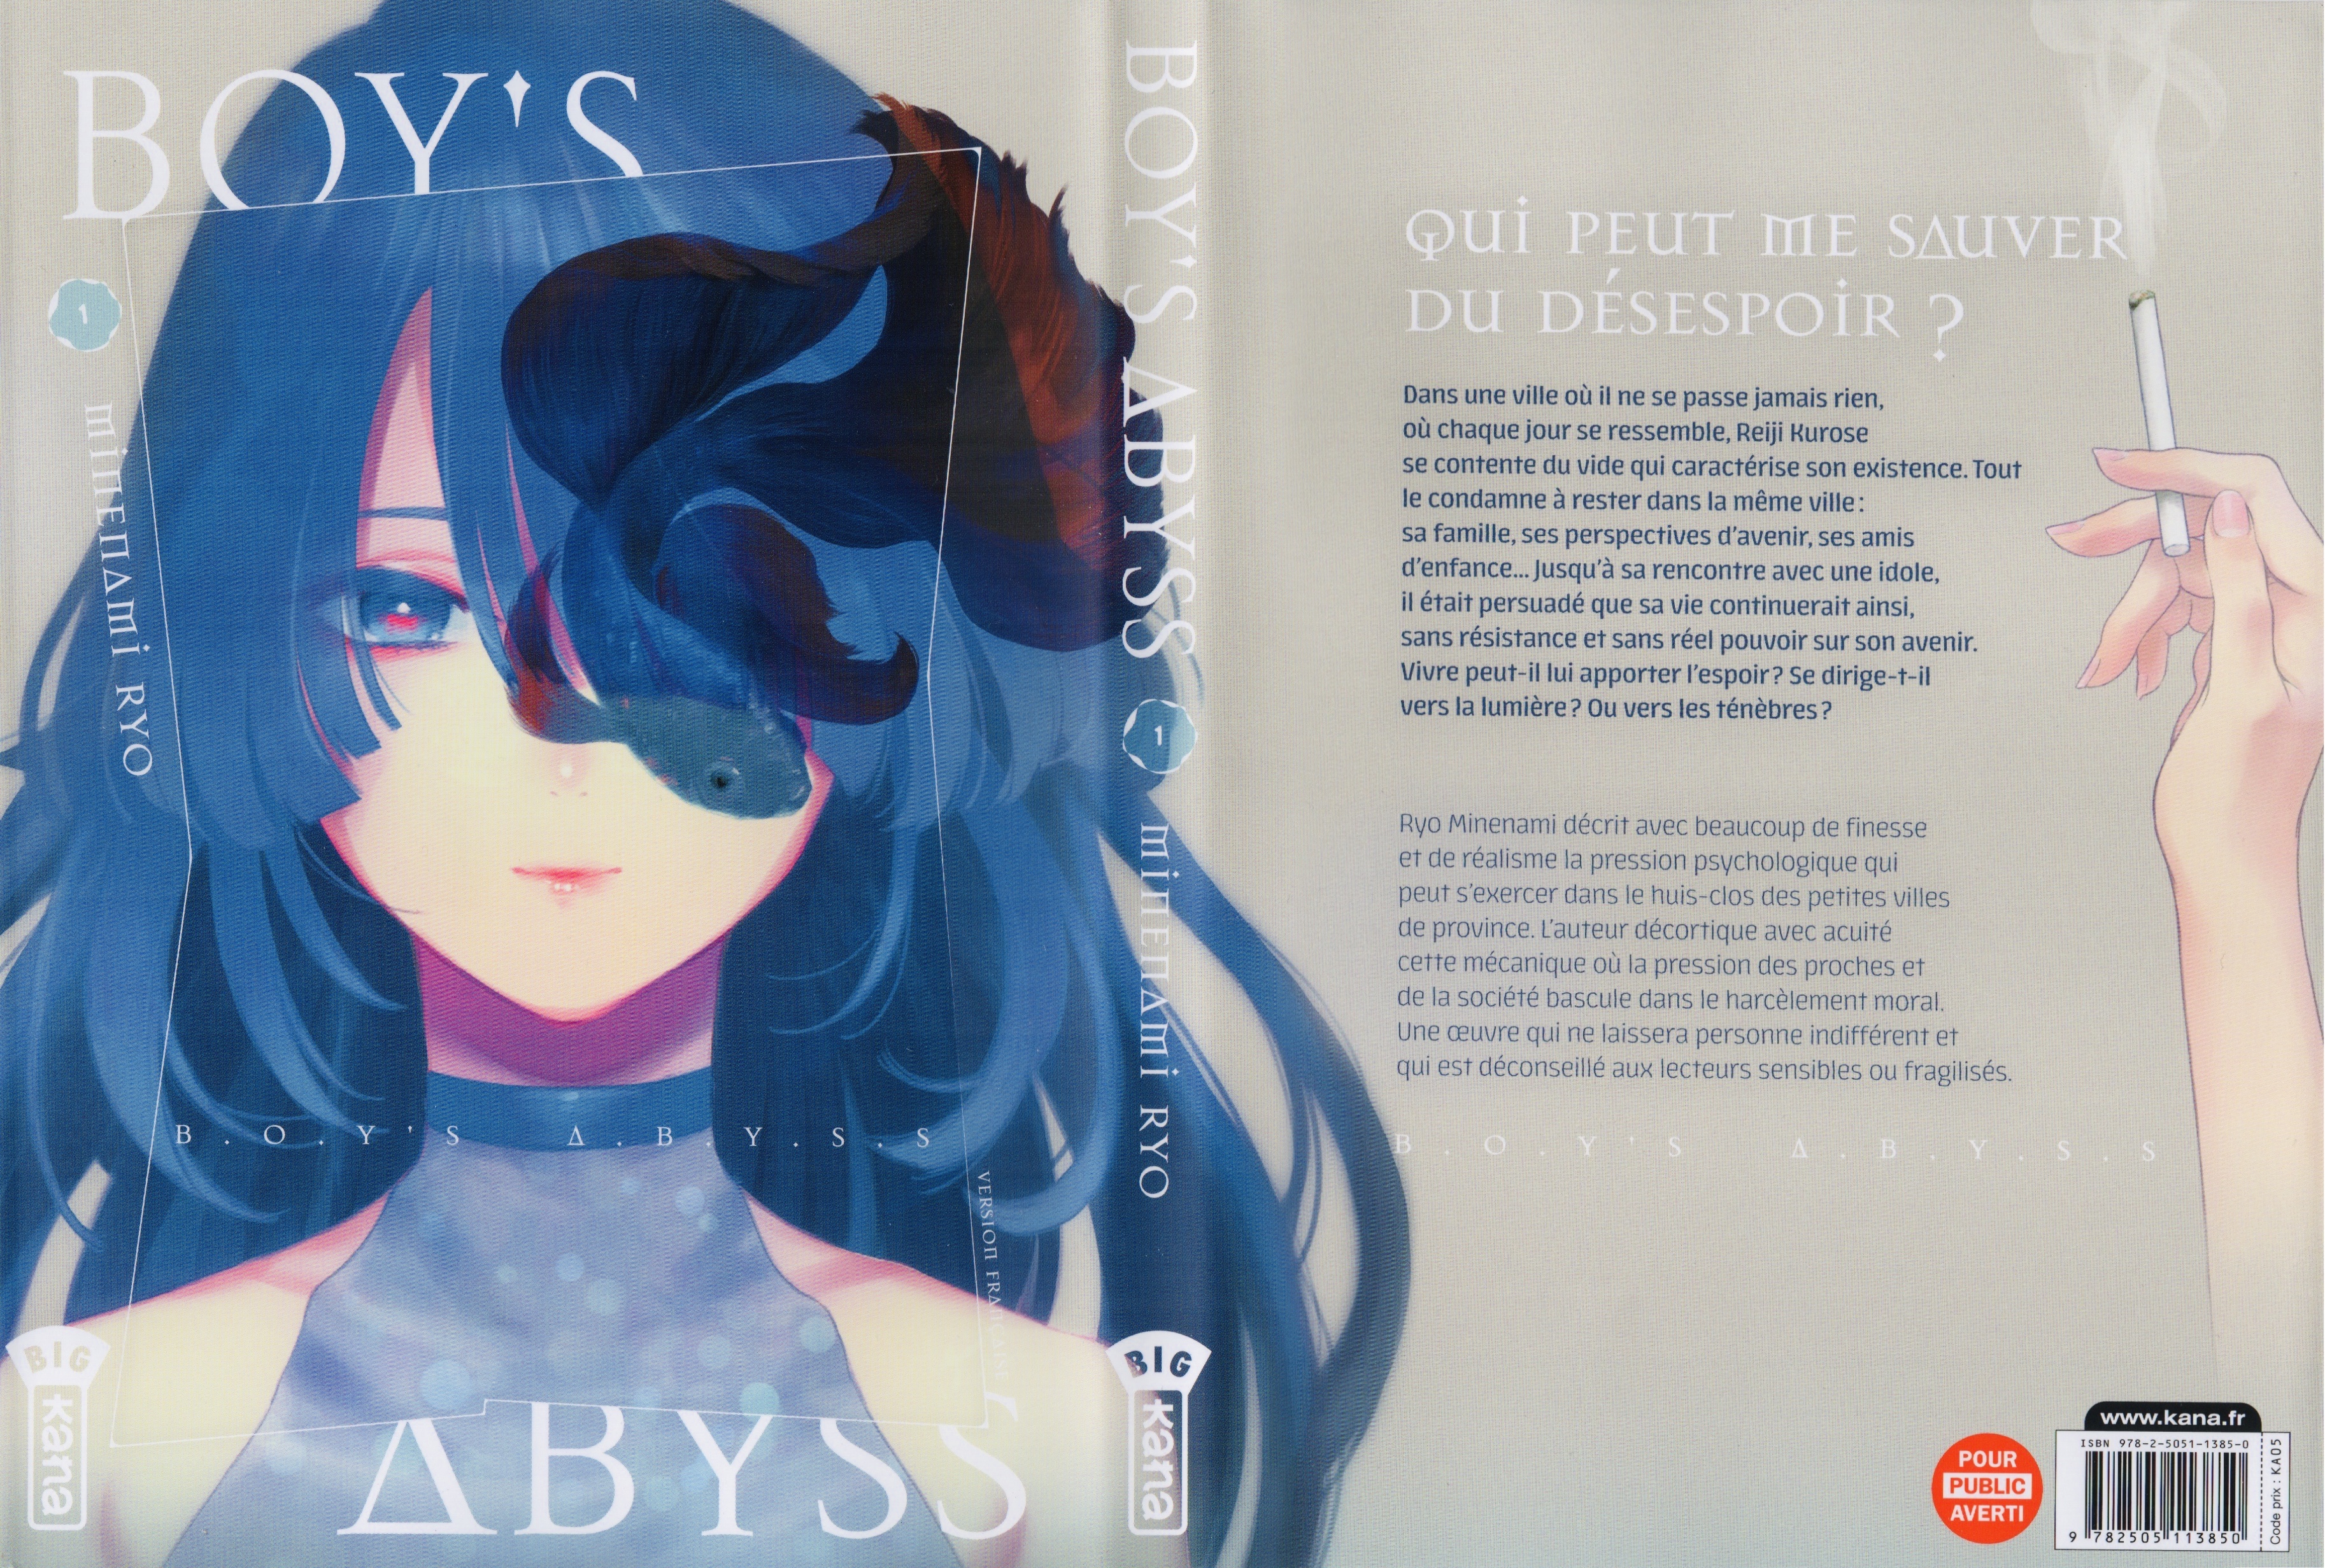 Boy’s Abyss Avis Critique Review Shonen no Abyss Ryo Minenami Tome 1 Big Kana Suicide Manga Psychologique Idol Seinen Les Trésors du Nain Inio Asano